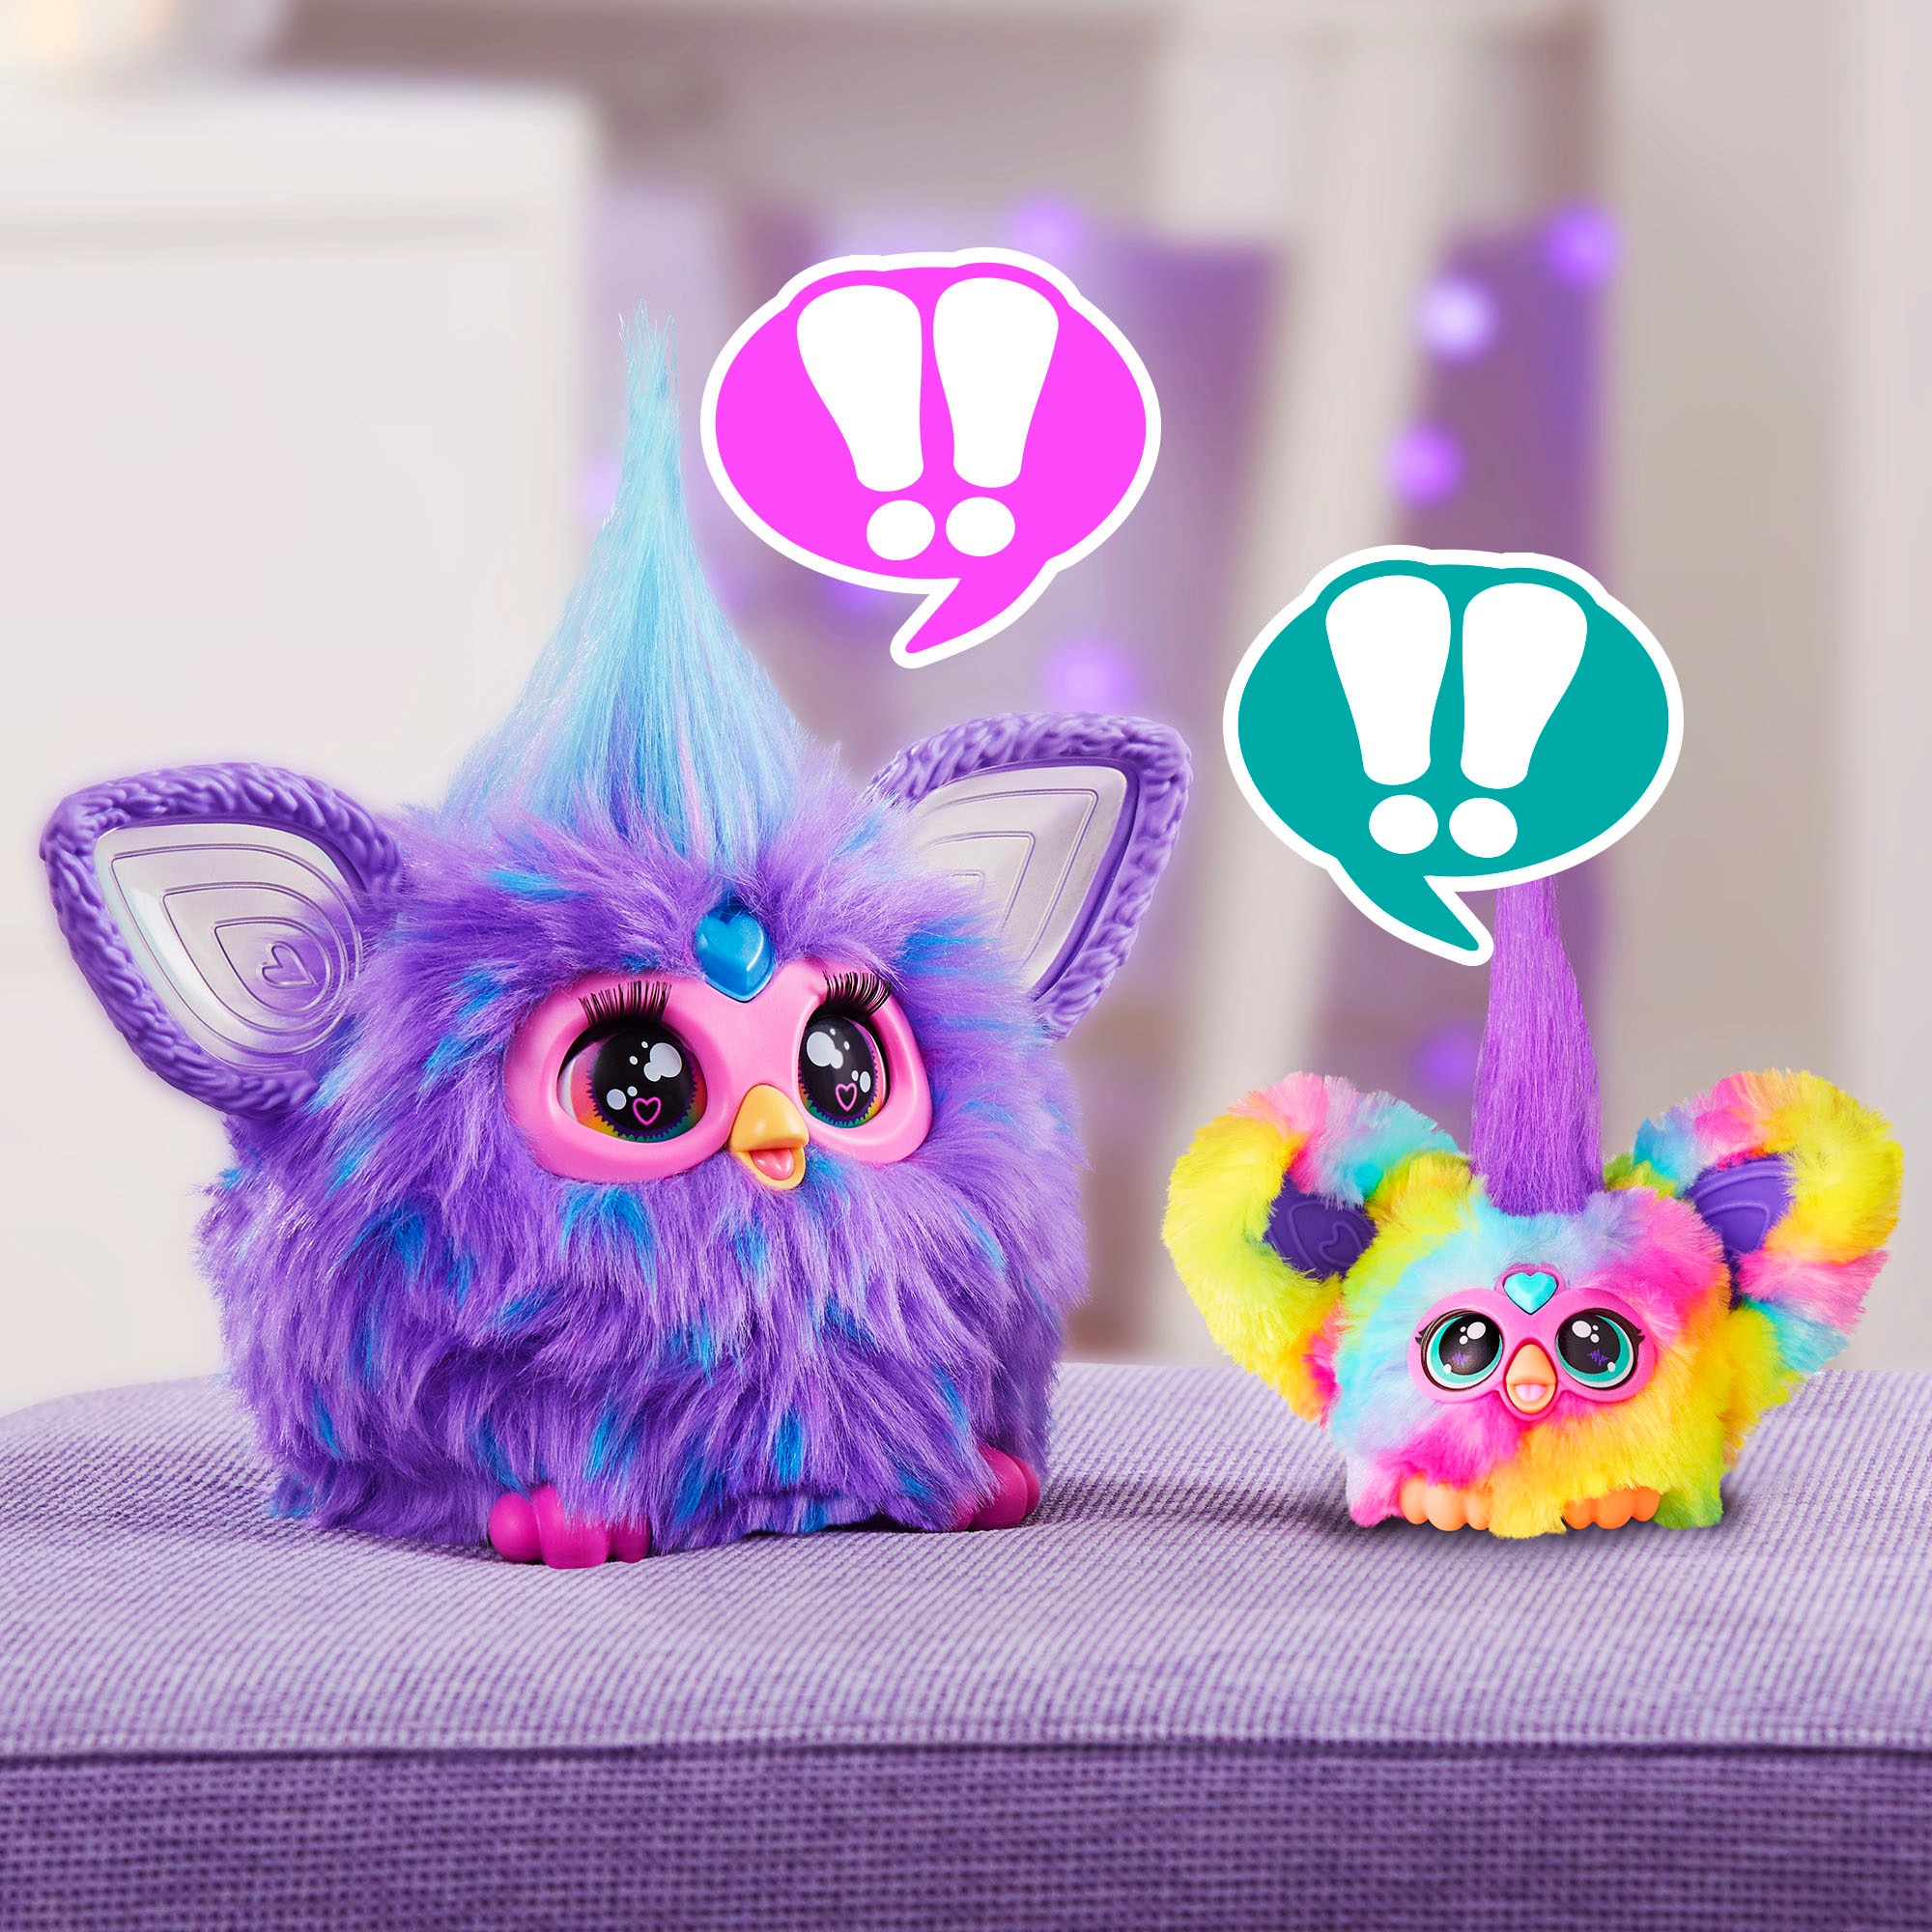 Hasbro Plüschfigur »Furby, Furblets Ray-Vee«, mit Sound